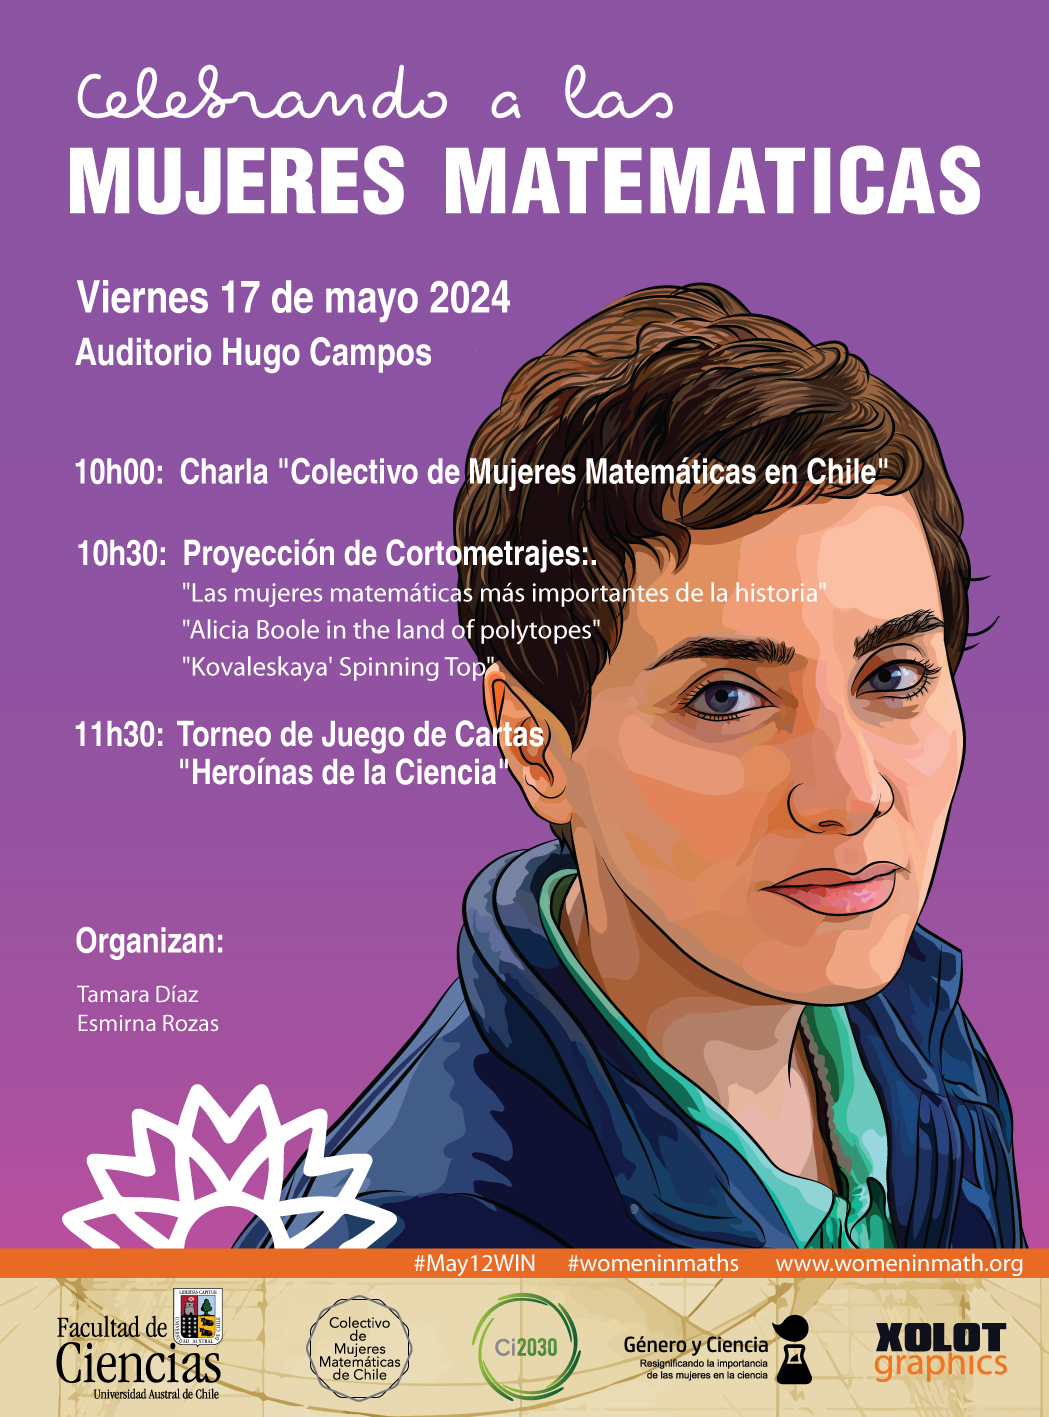 Celebrating Women in Math - Austral University of Chile